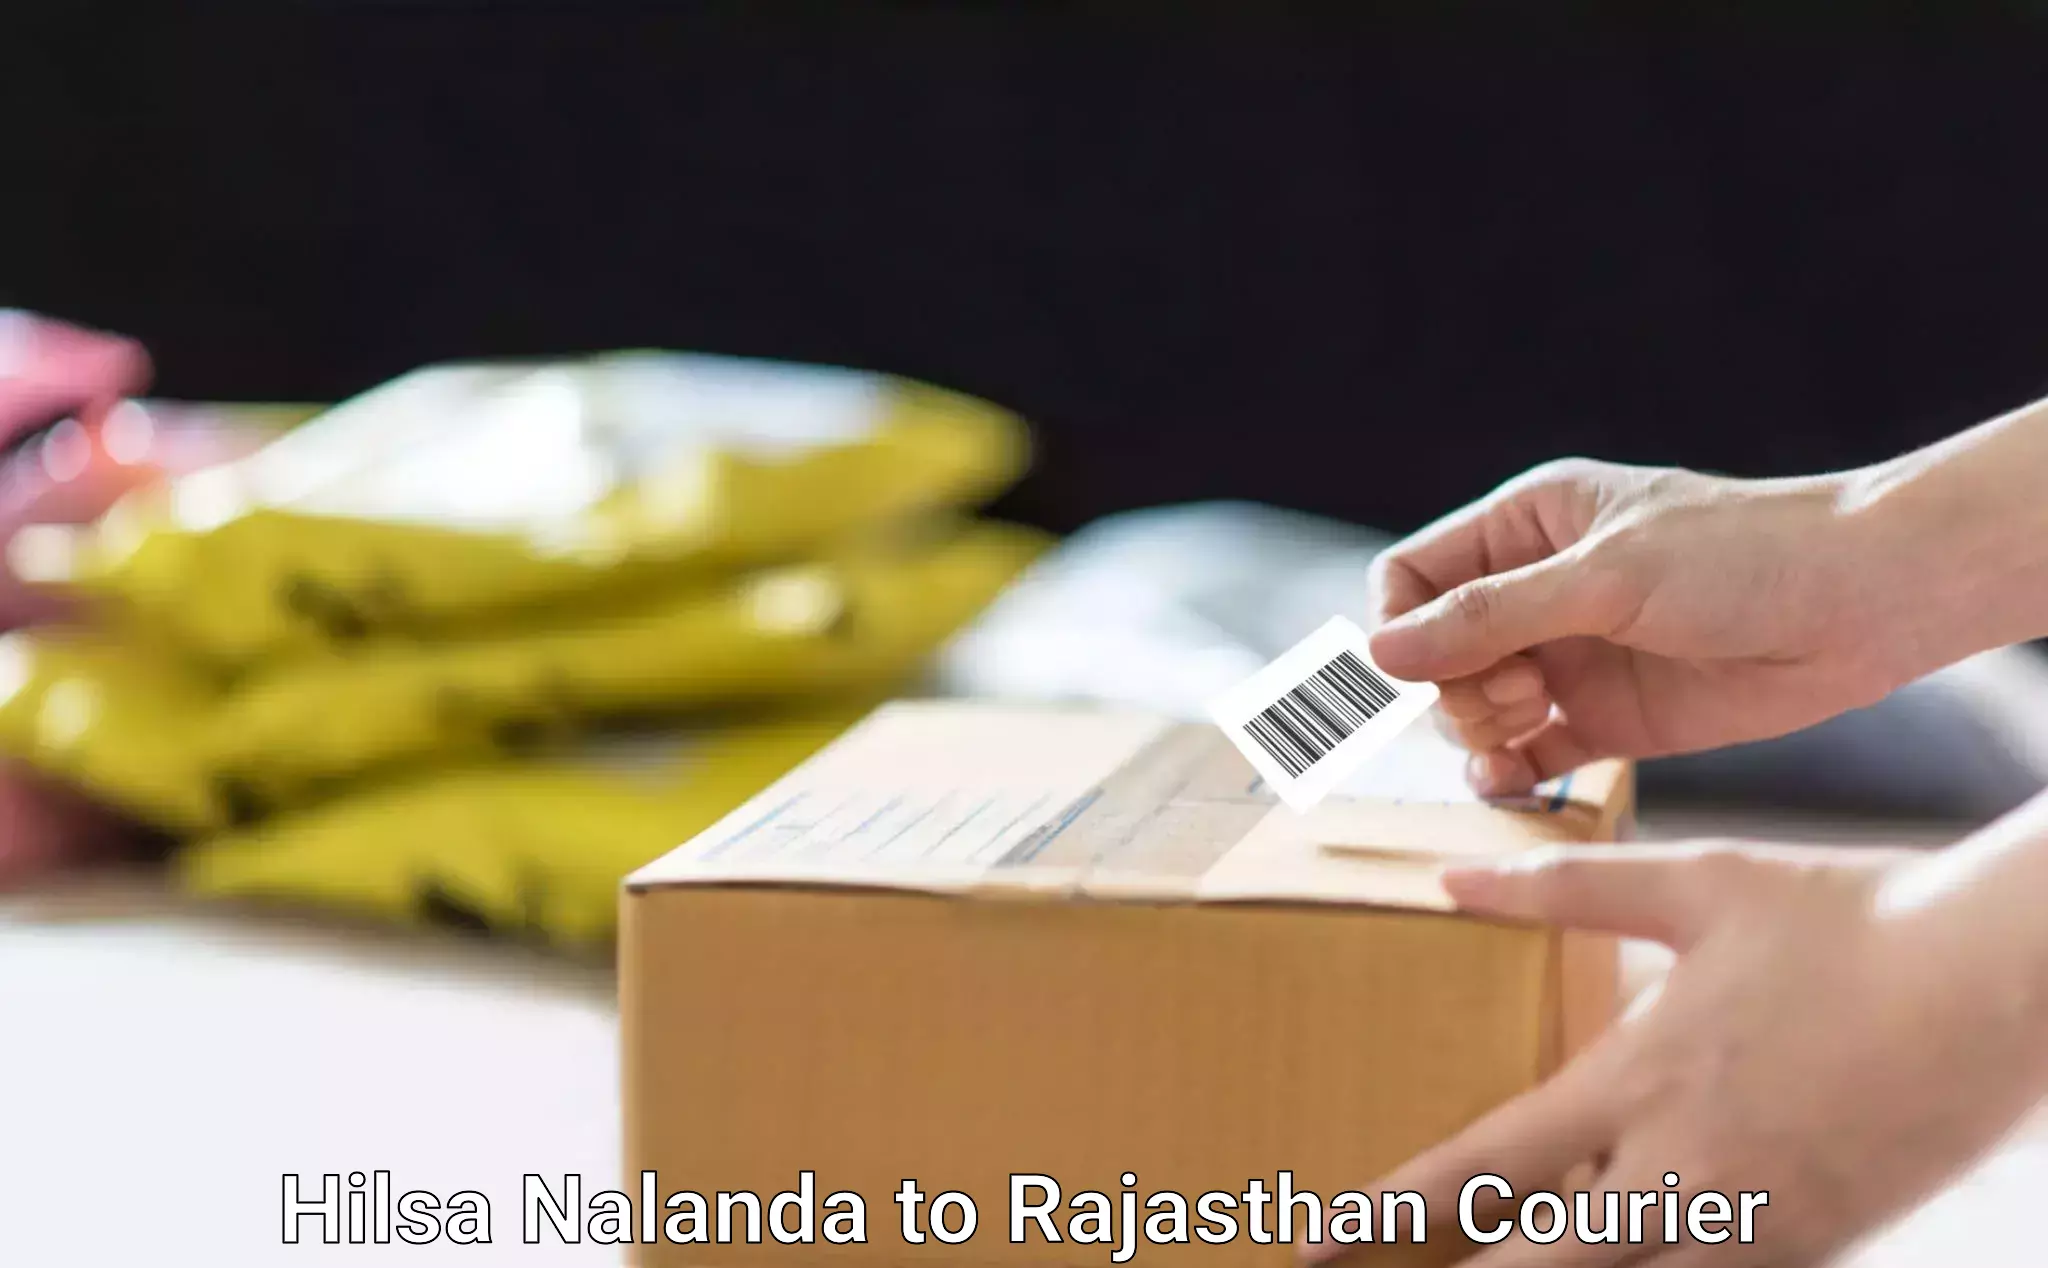 Furniture moving experts Hilsa Nalanda to Sangaria